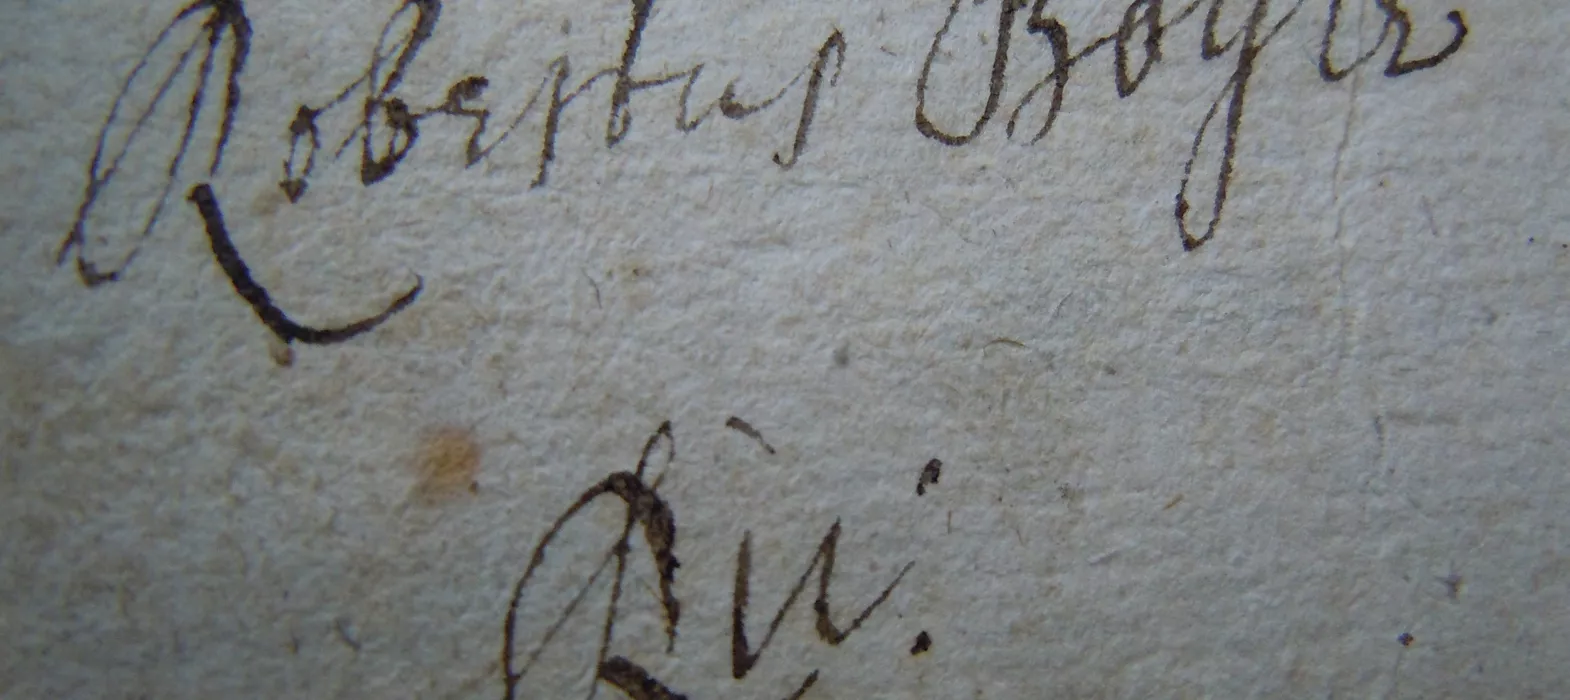 Robert Boyle's signature